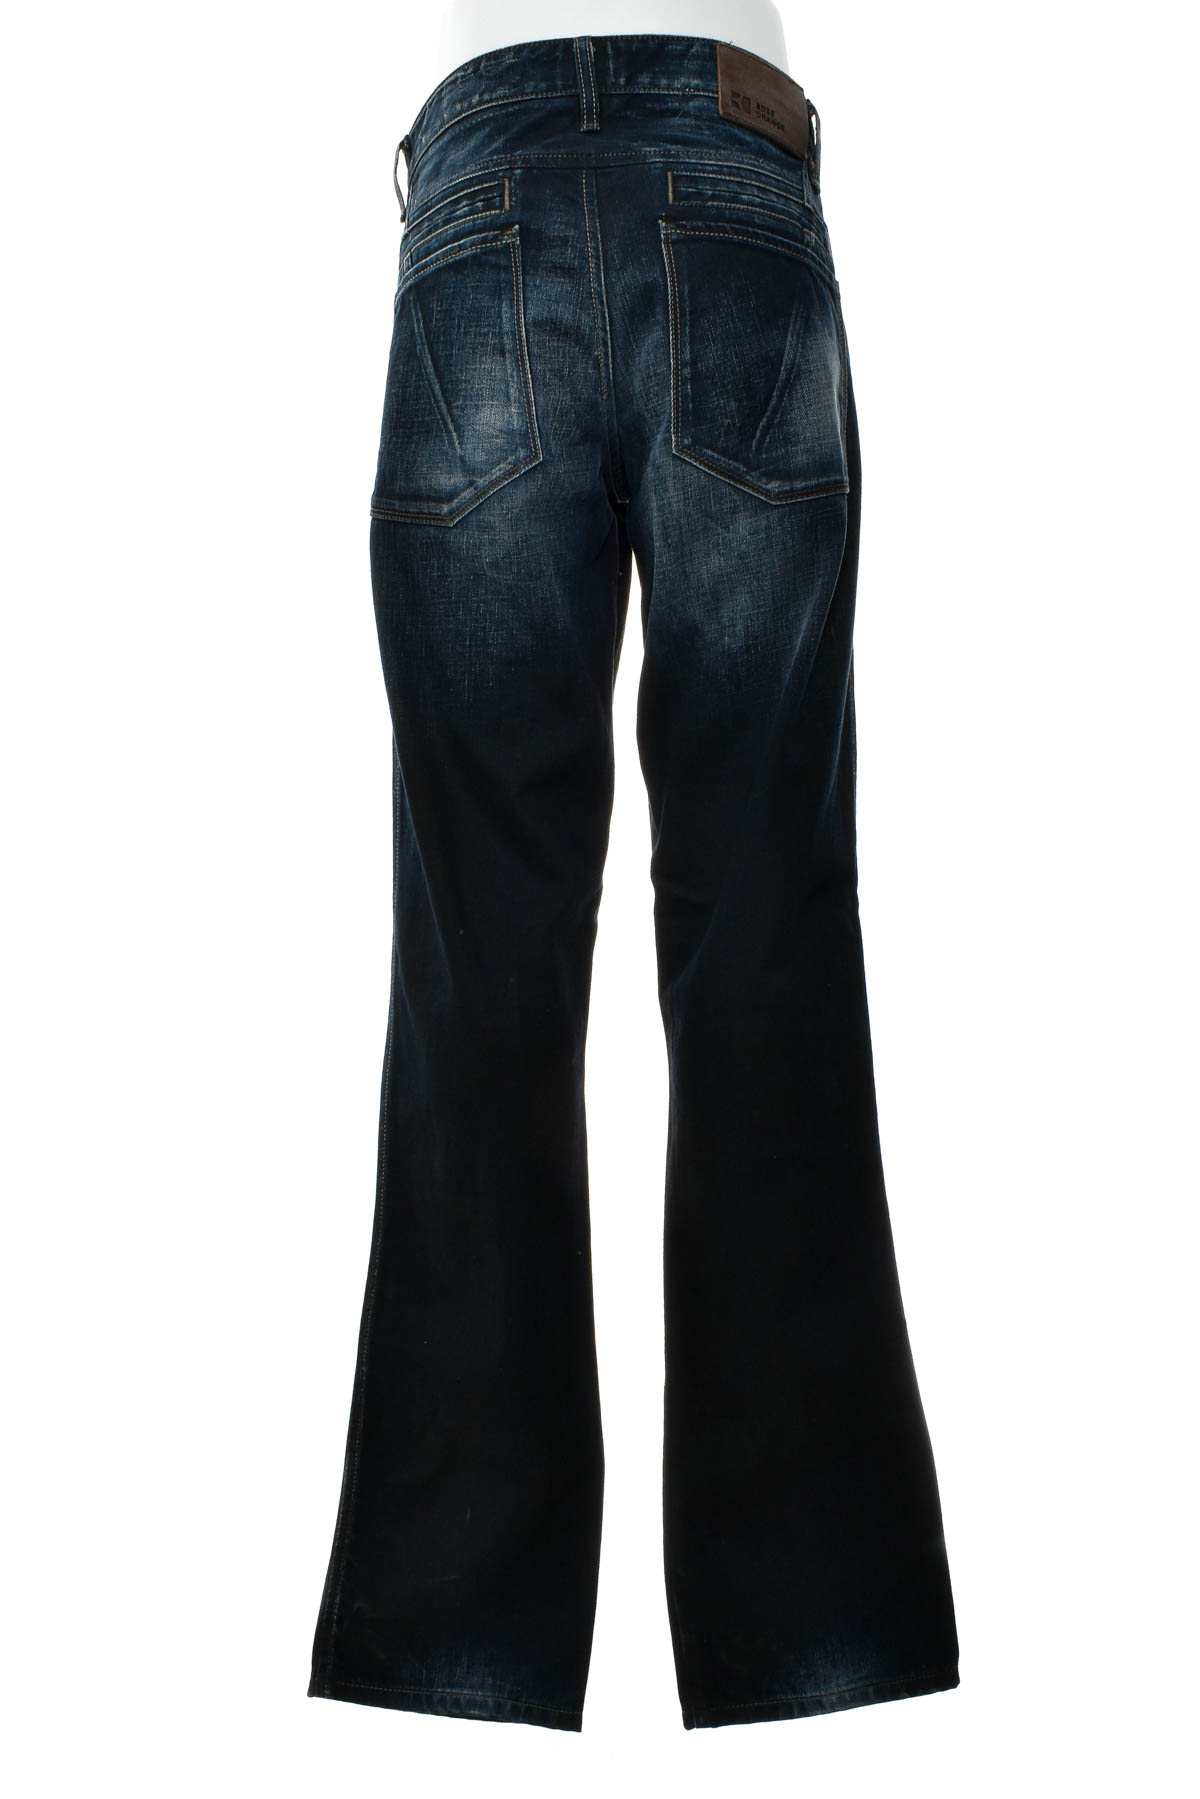 Men's jeans - Boss Orange - 1